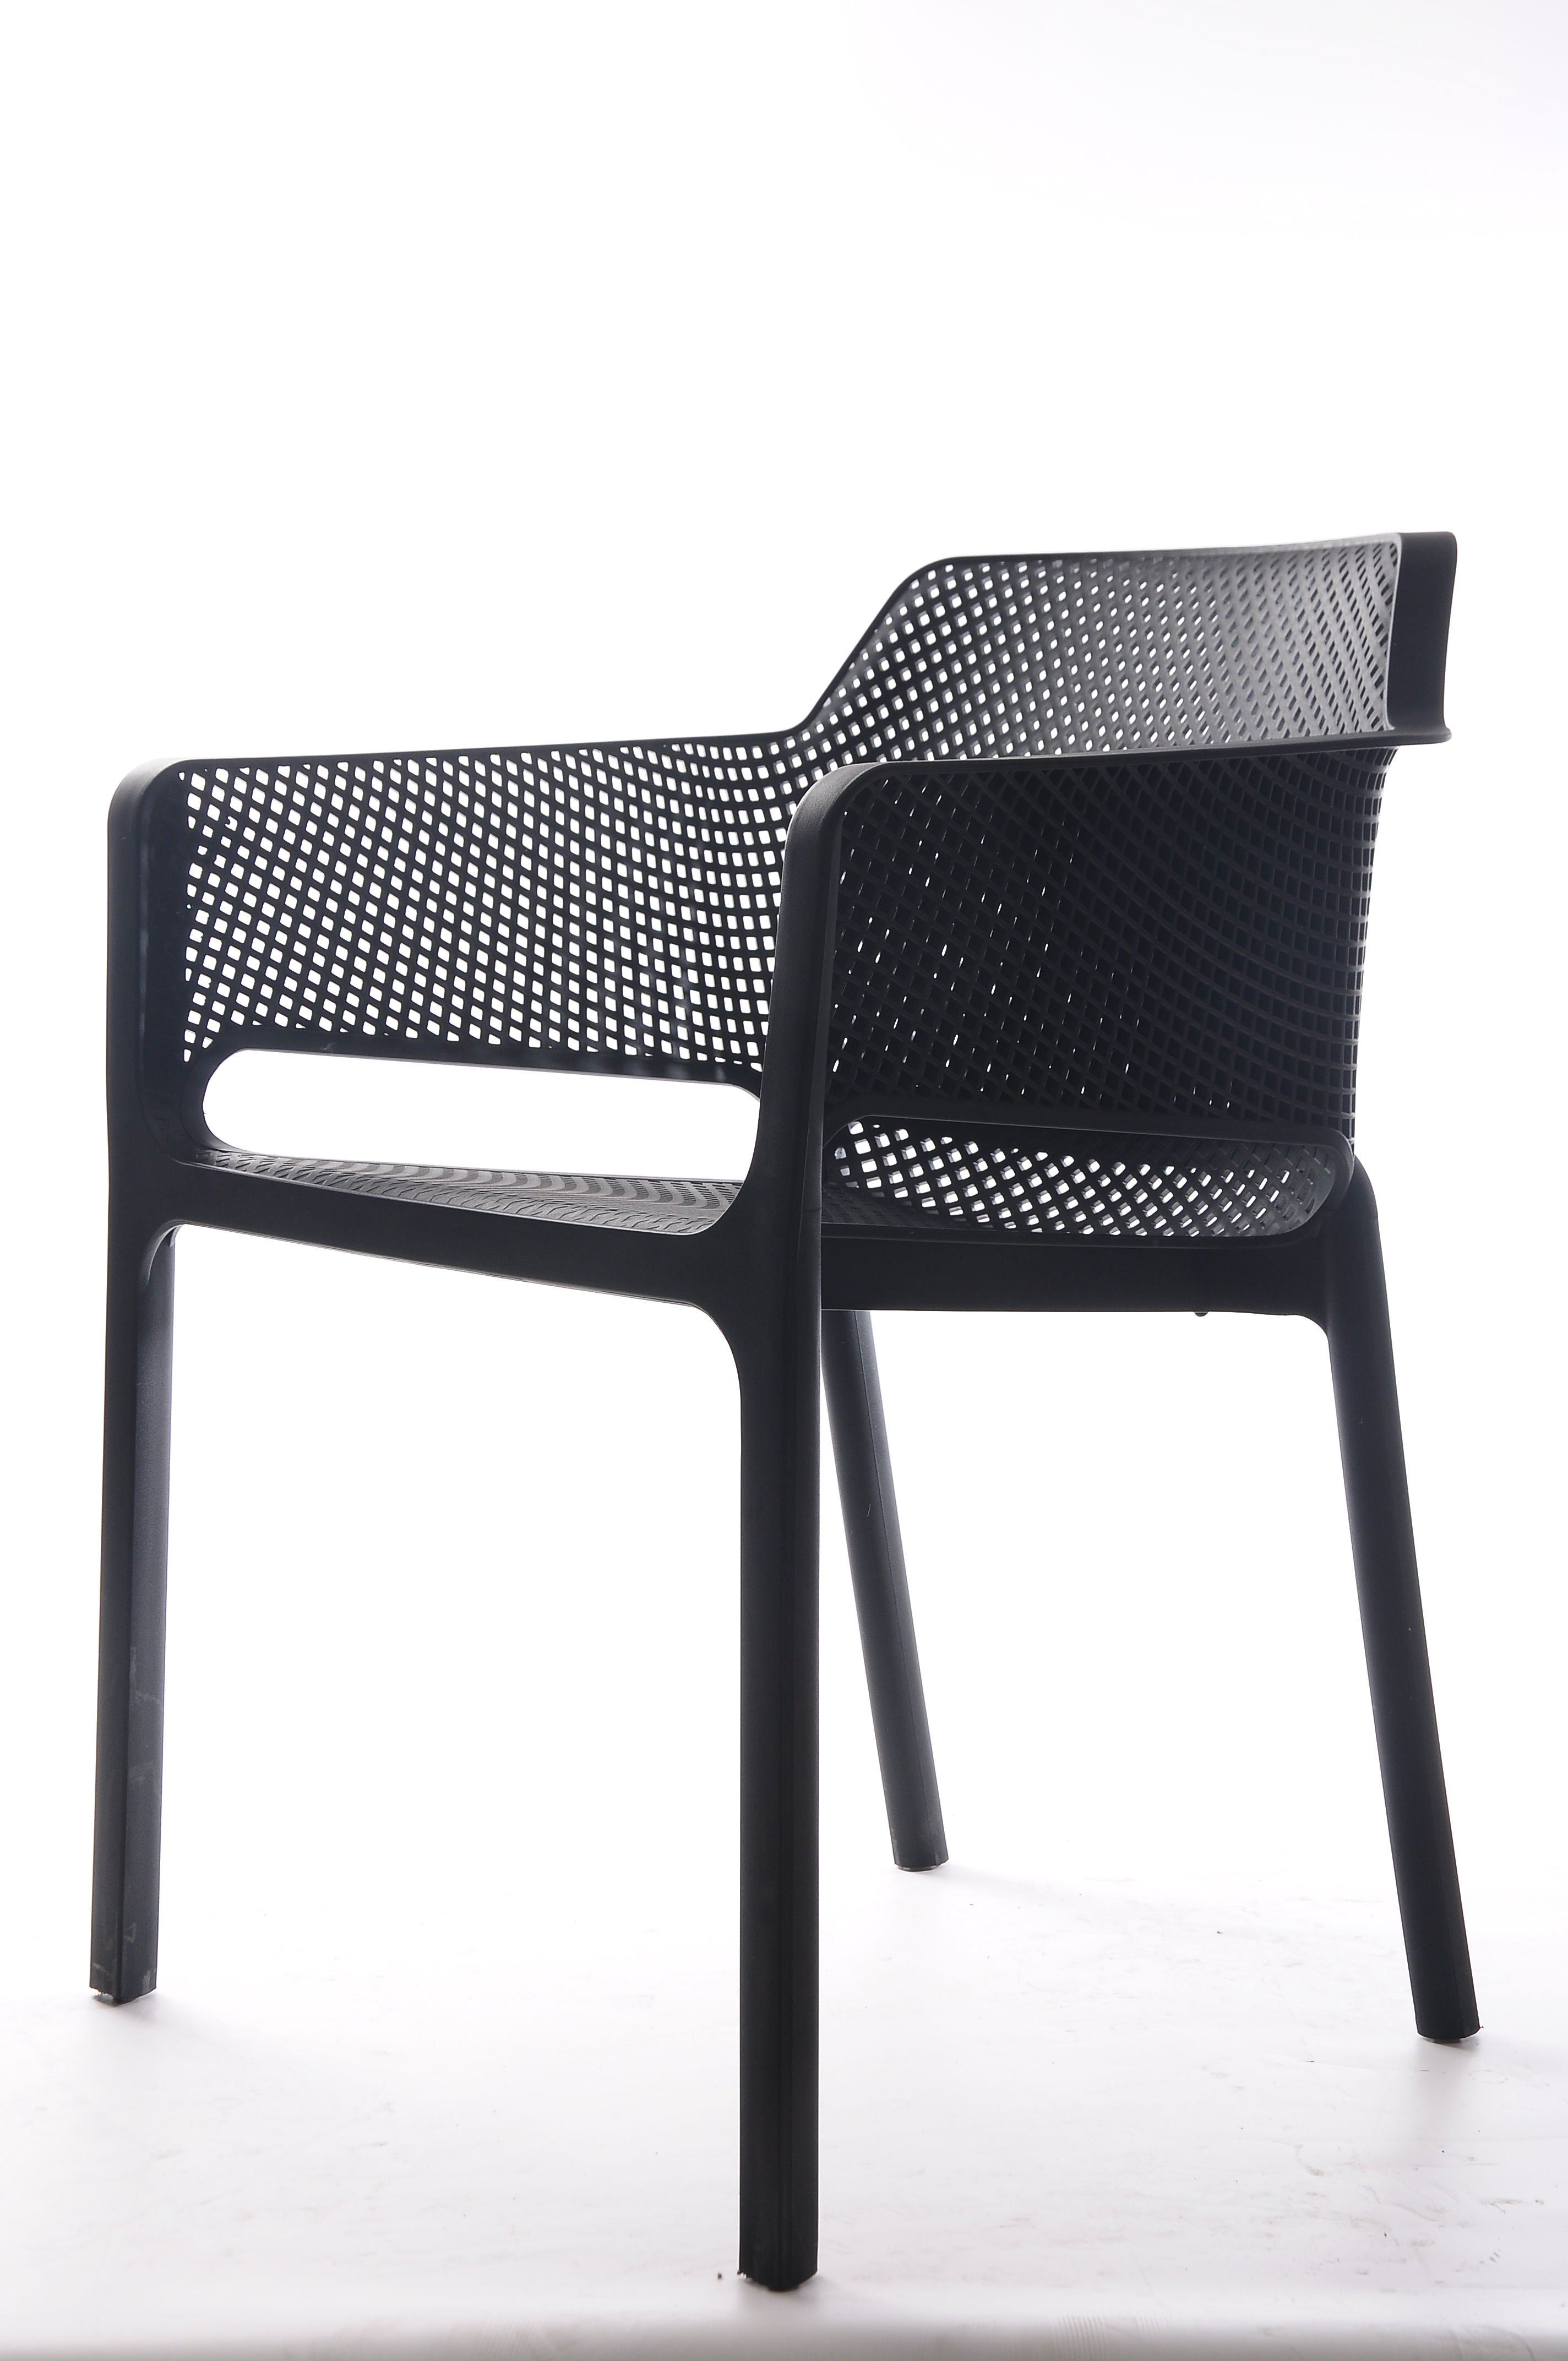 PatioZone Plastic Resin Chair with Hole Detail (PZ-MC23-020N) - Black